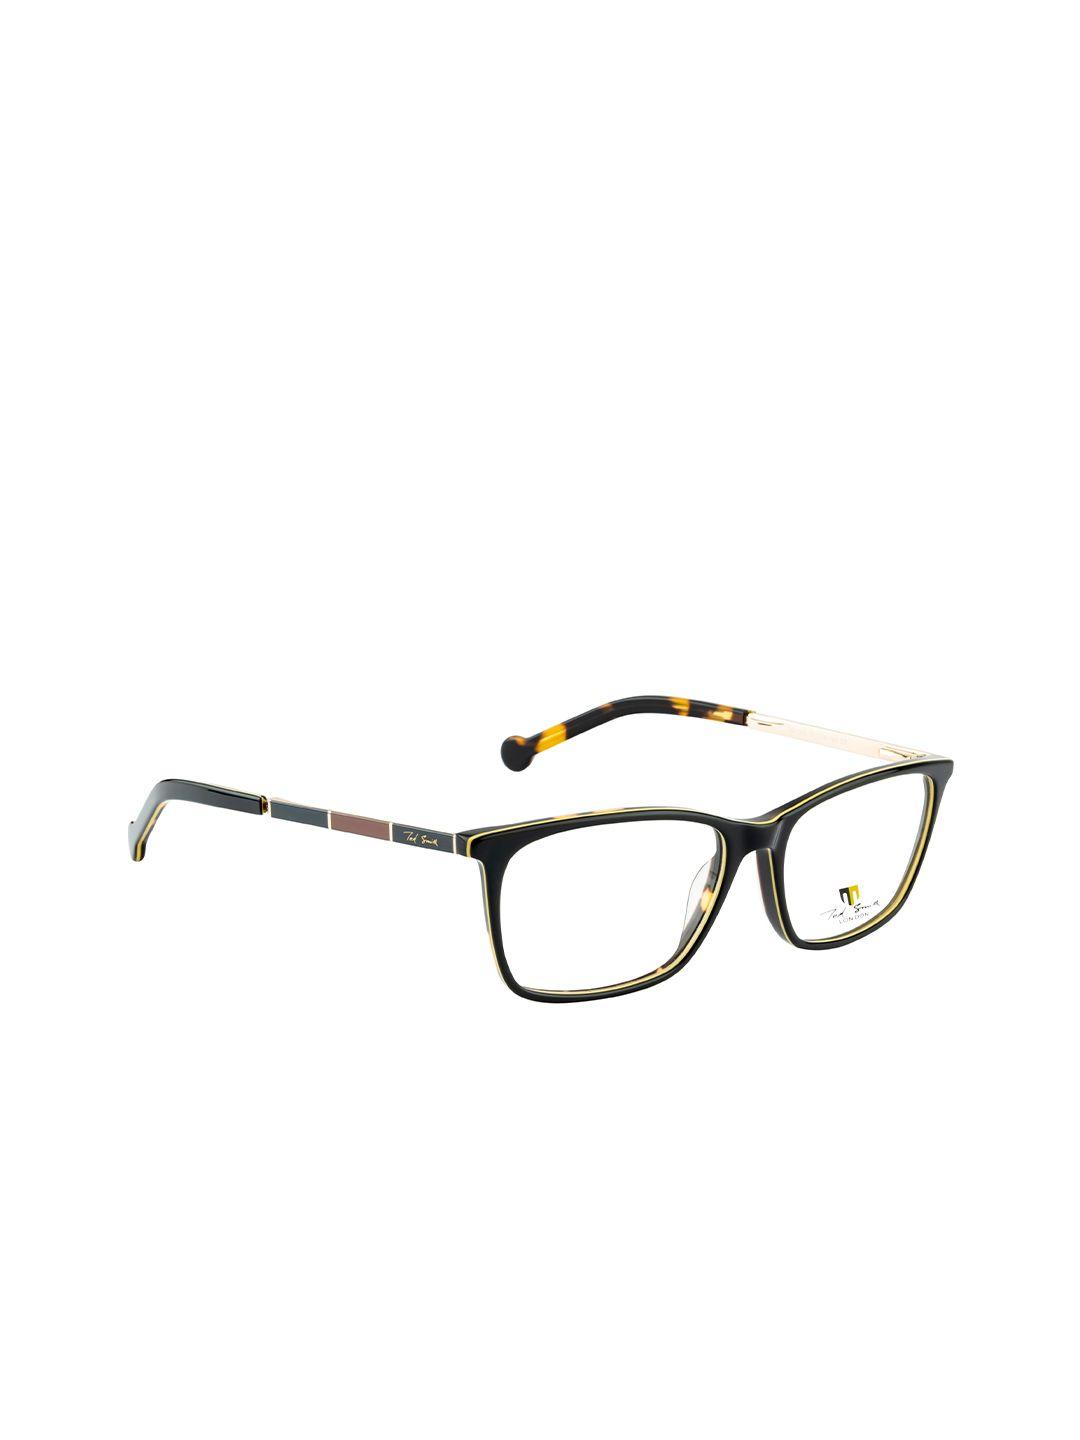 ted smith unisex black & yellow full rim rectangle frames eyeglasses